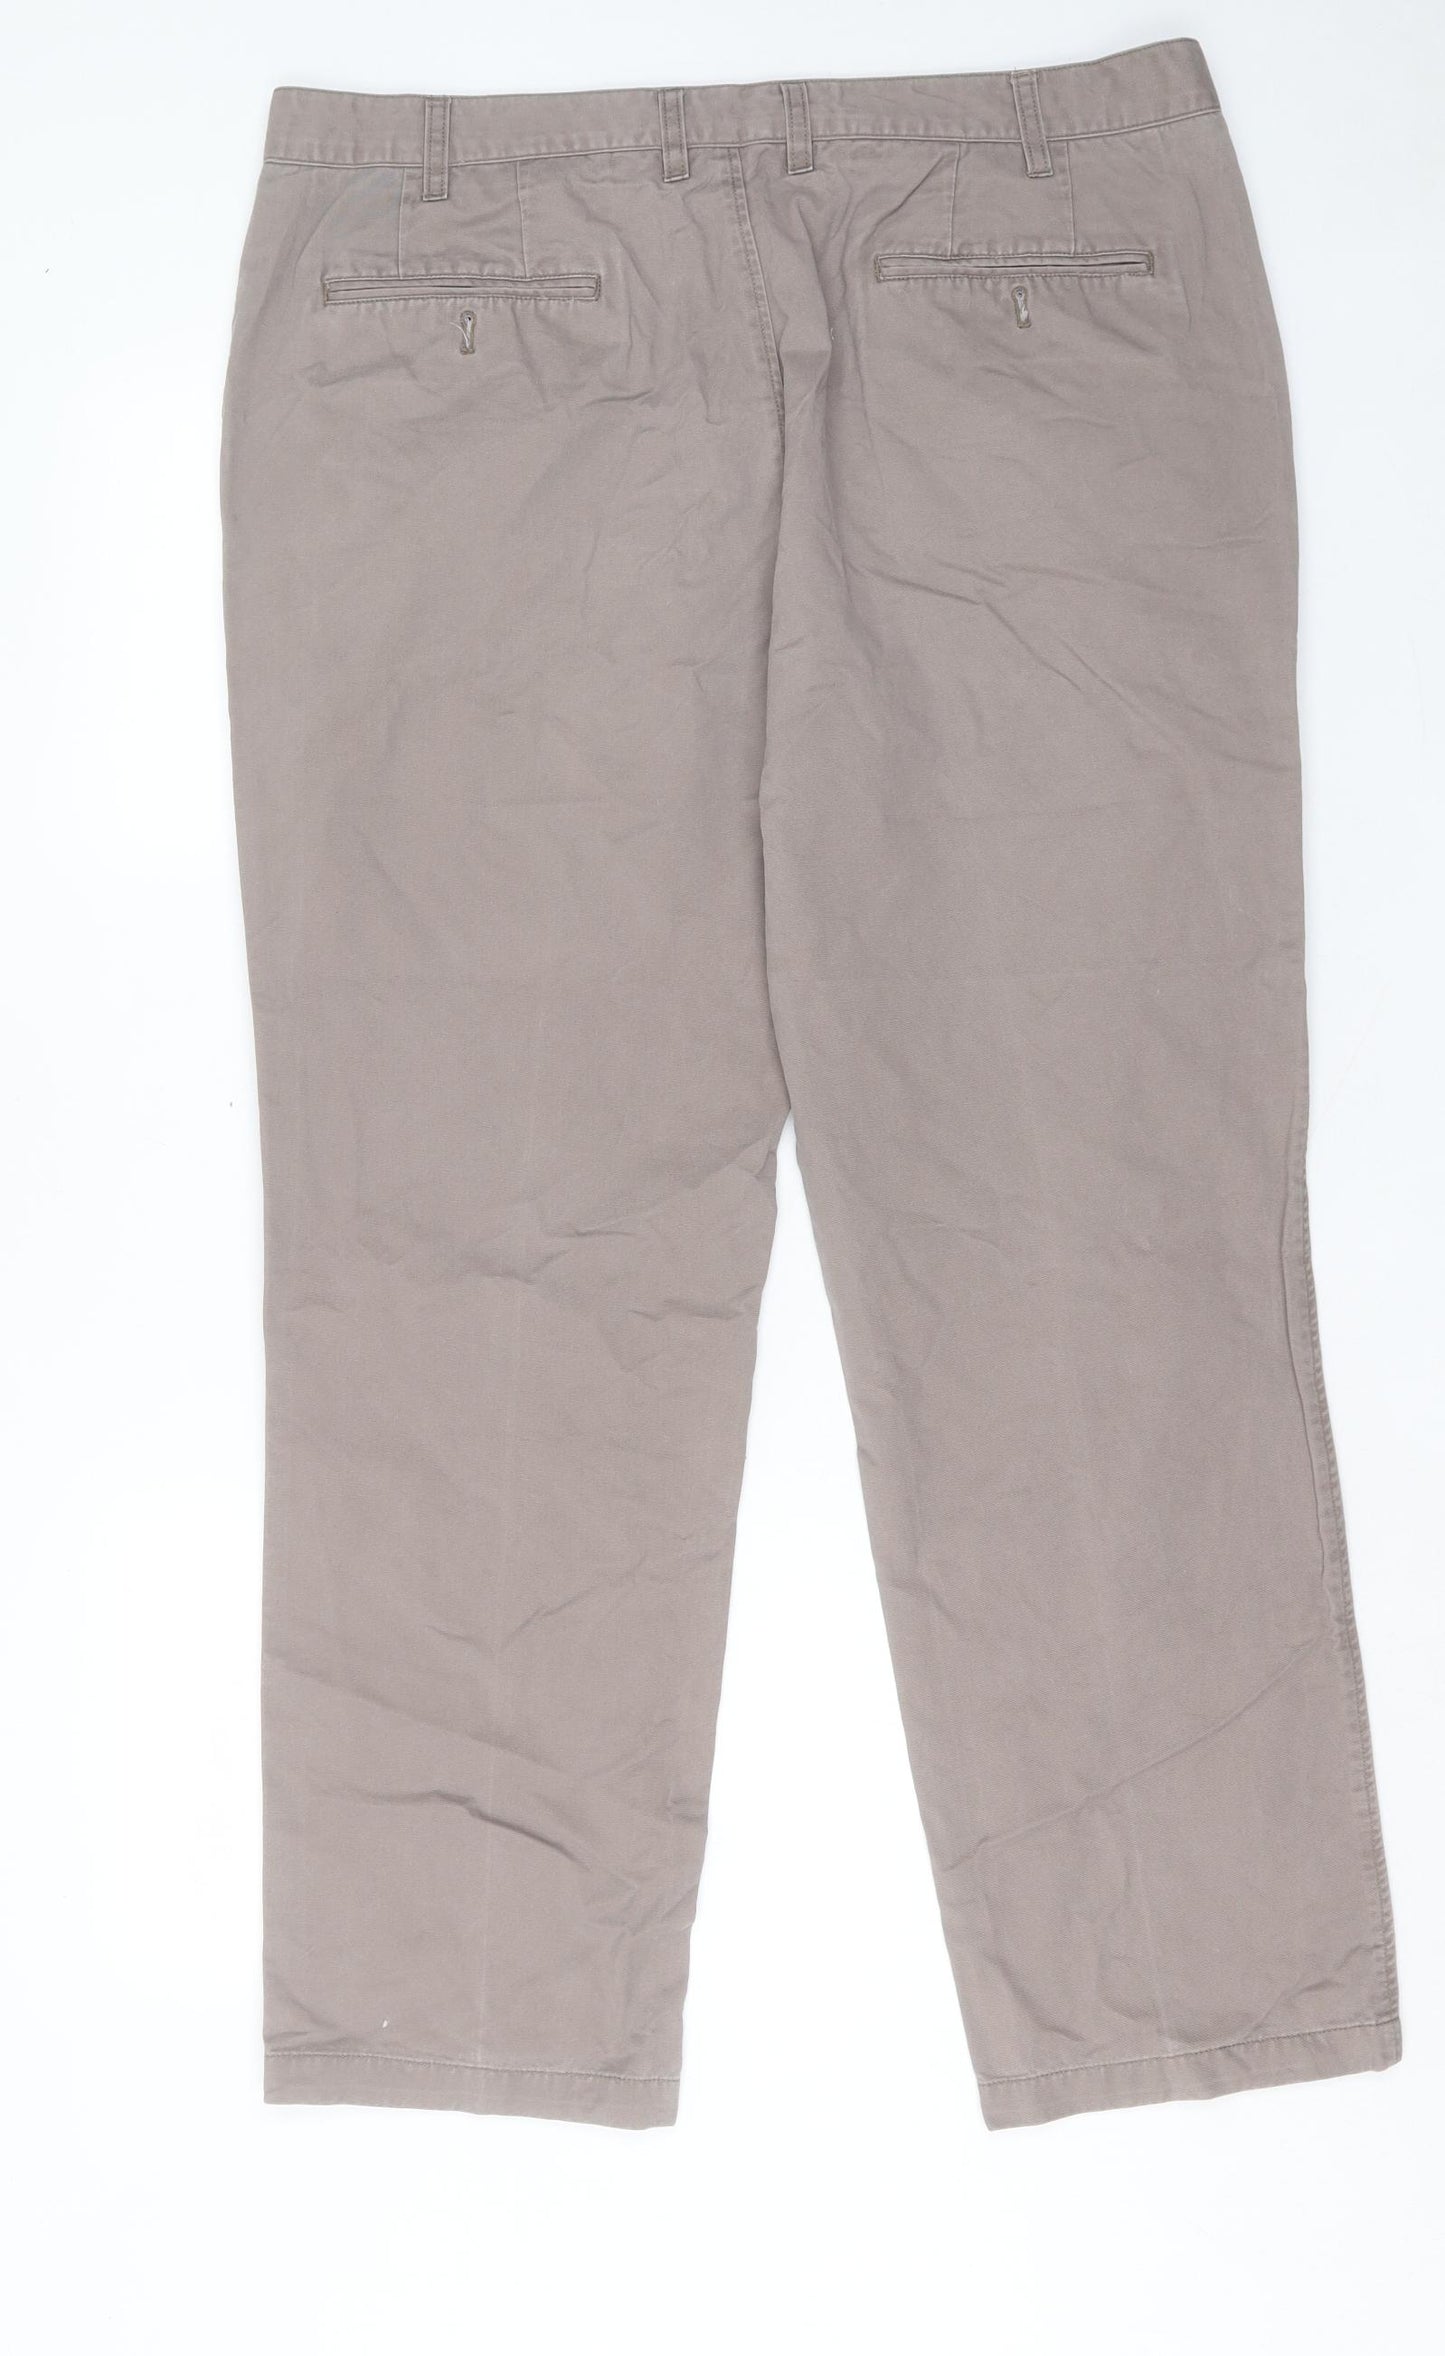 Gurteen Mens Beige Cotton Chino Trousers Size 40 in L30 in Regular Button